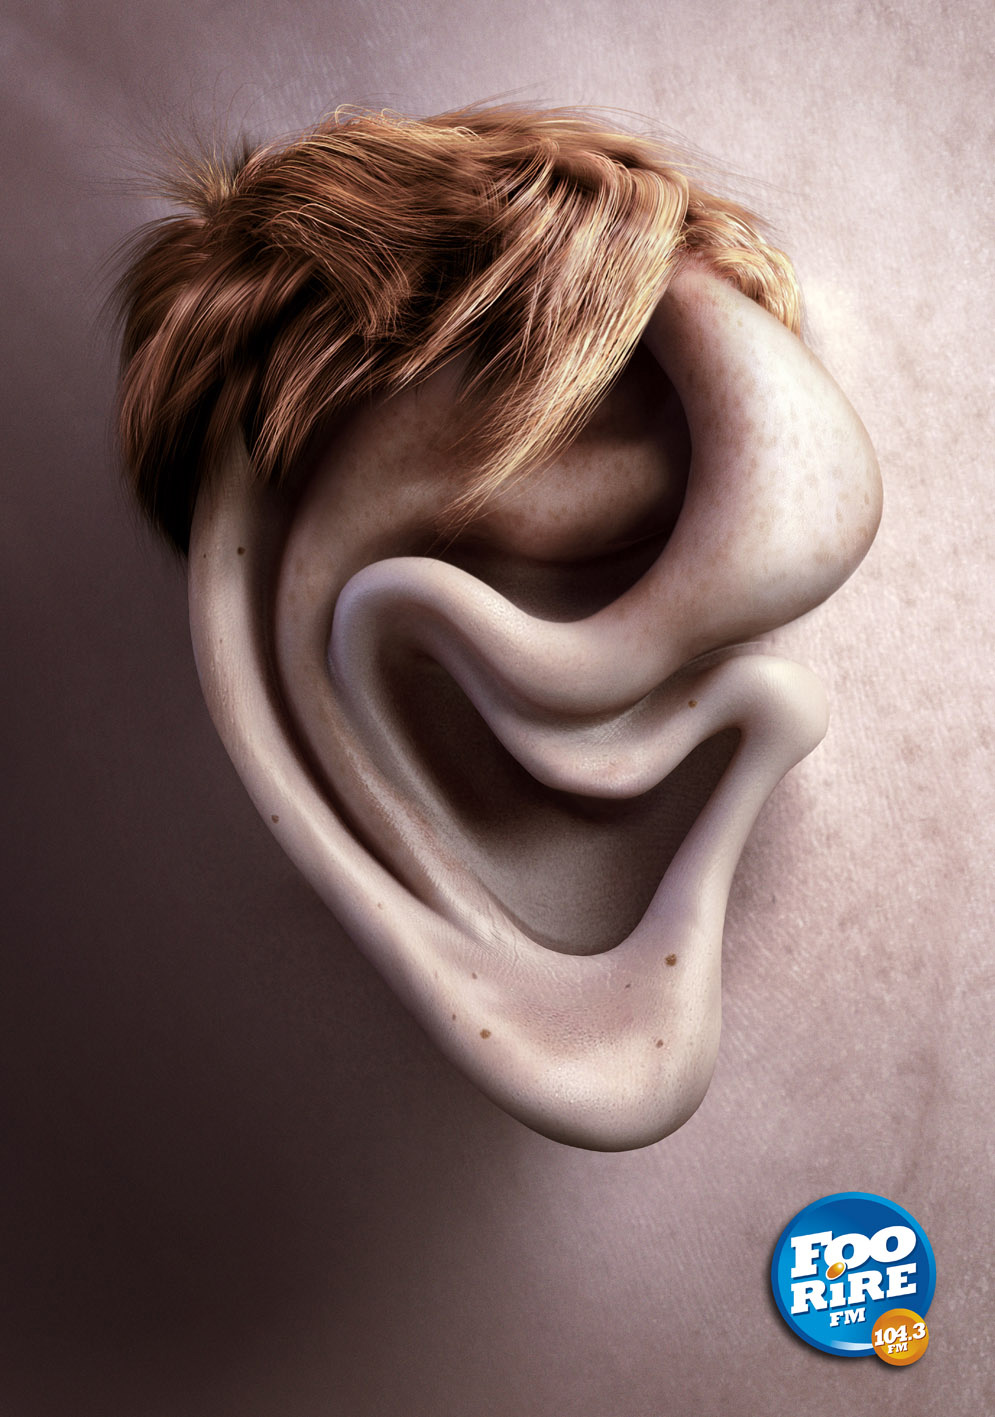 fm radio comedy station创意耳朵收听海报设计